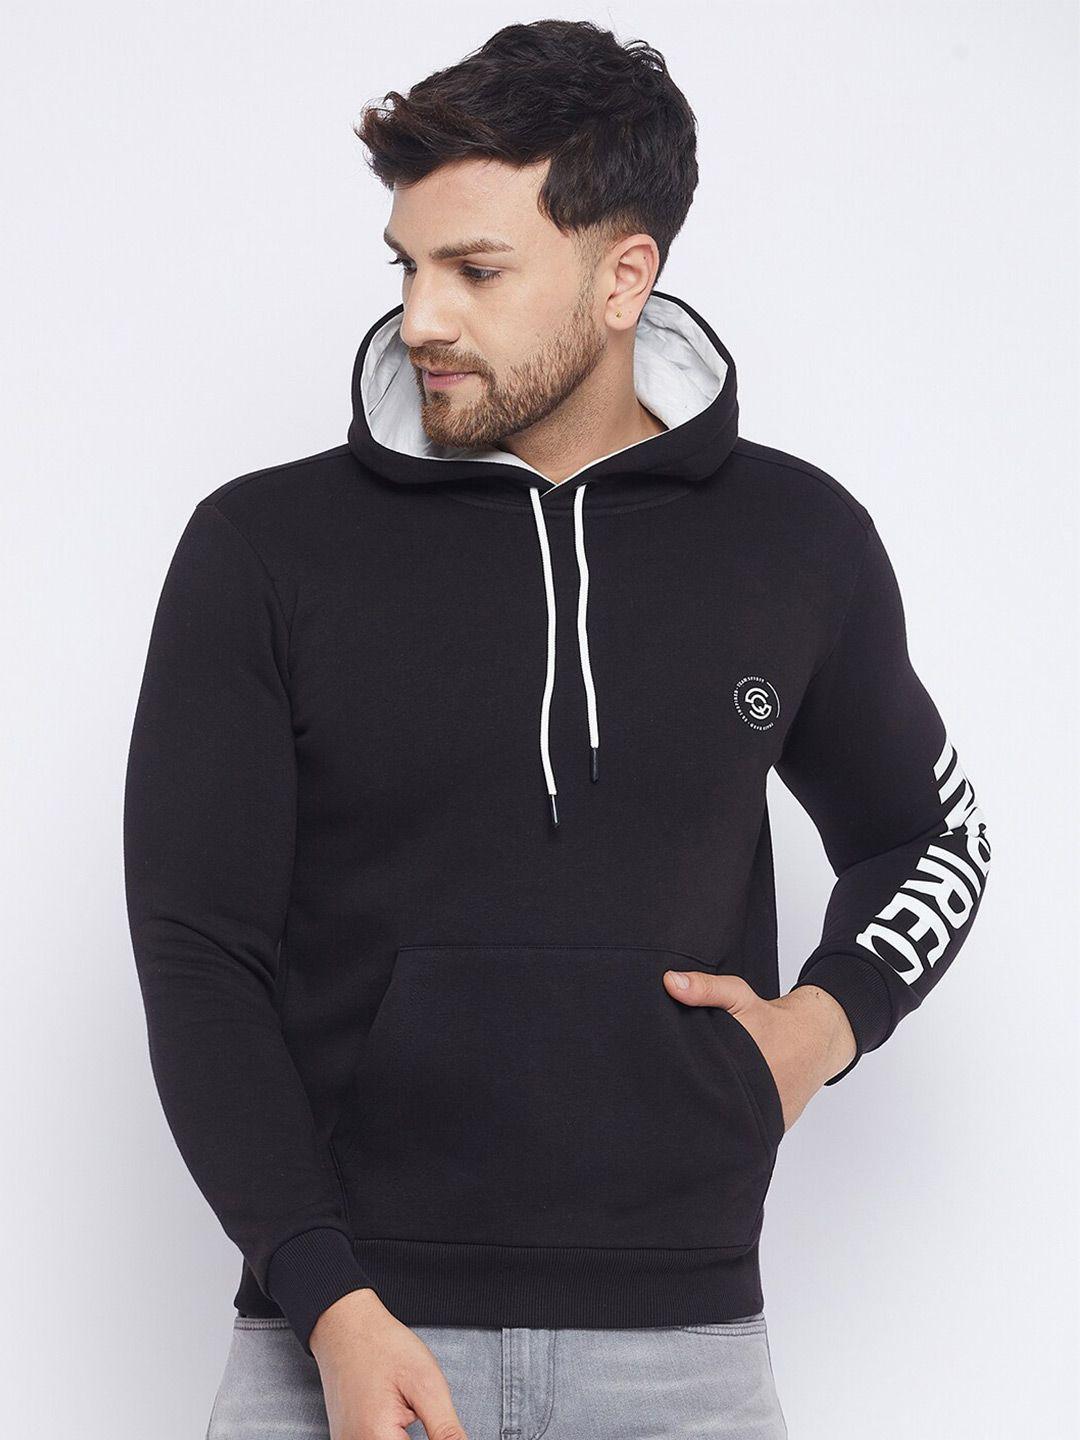 qubic-men-black-hooded-sweatshirt